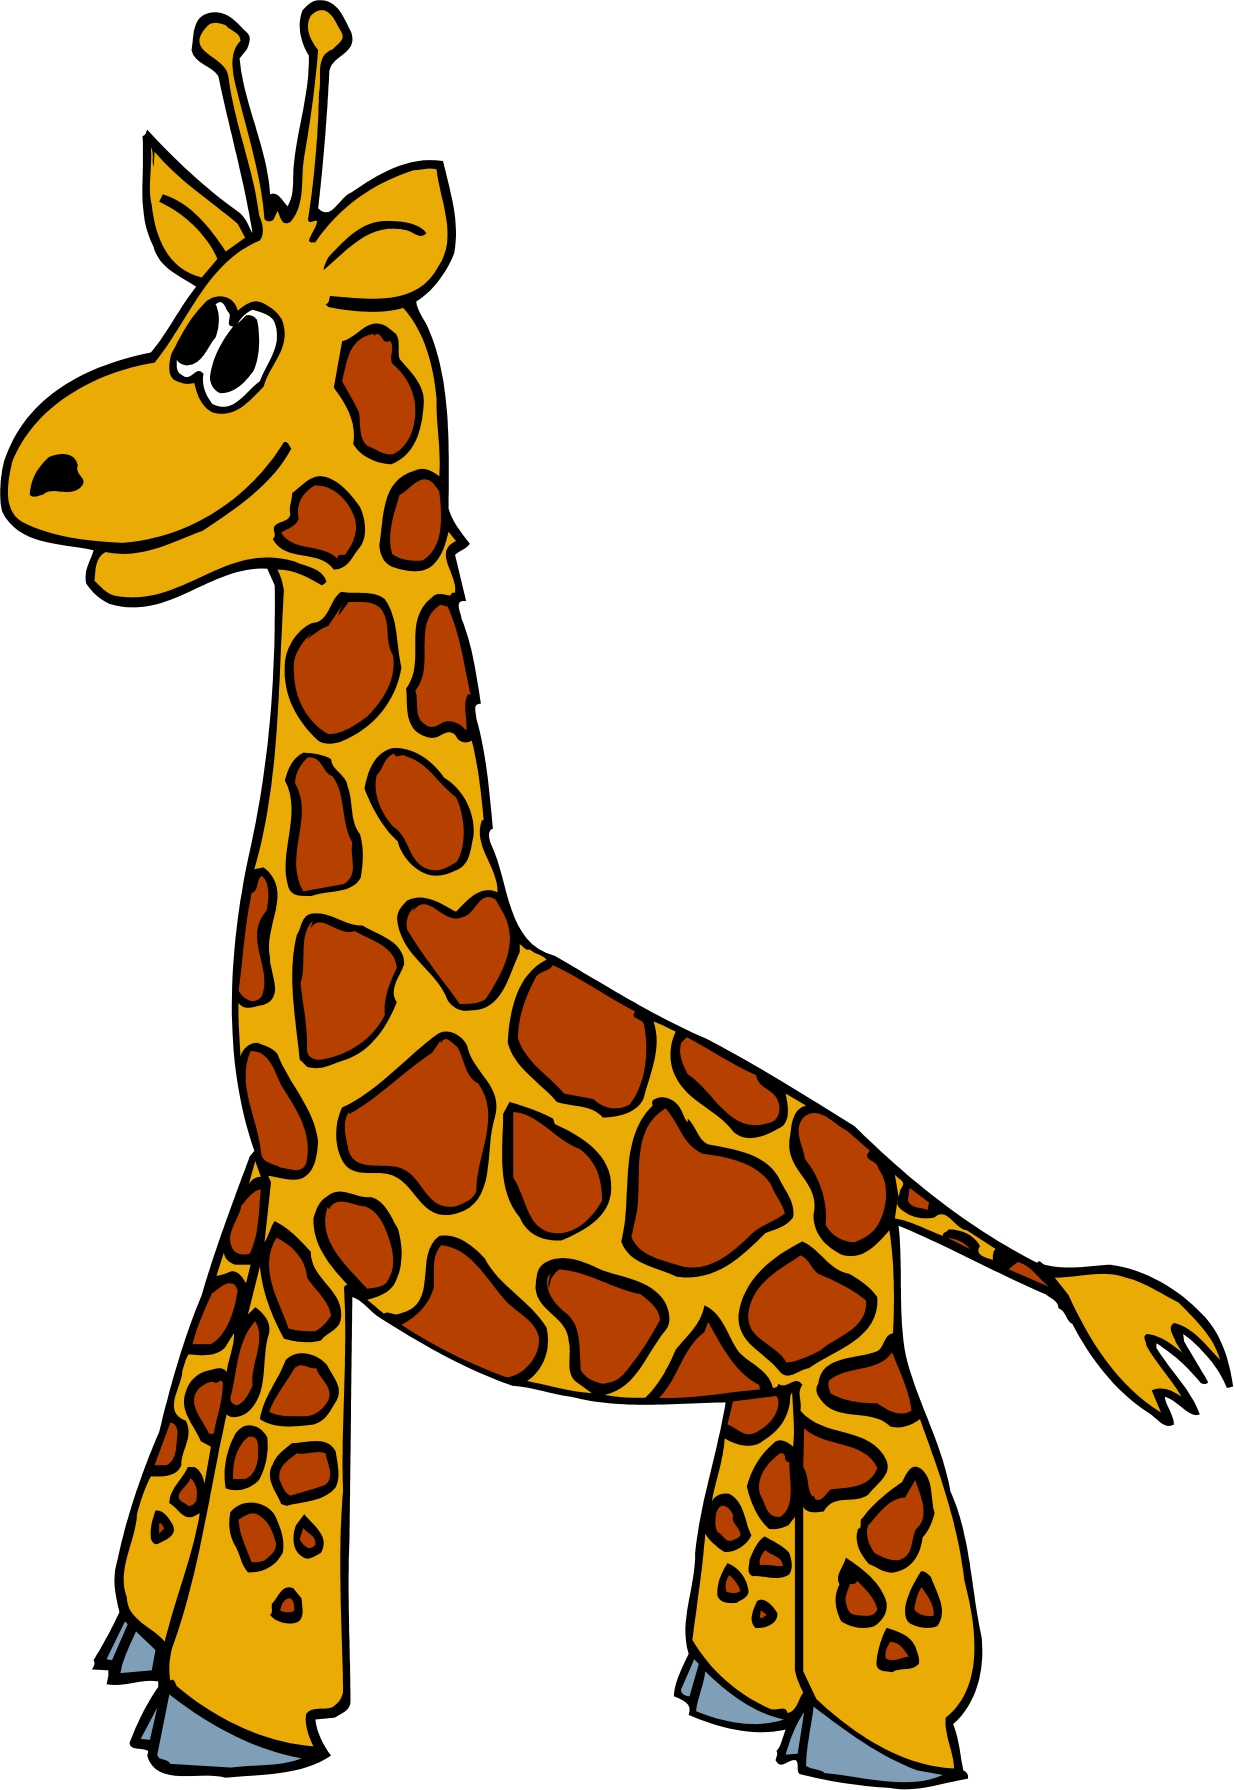 giraffe cartoon clipart - photo #46